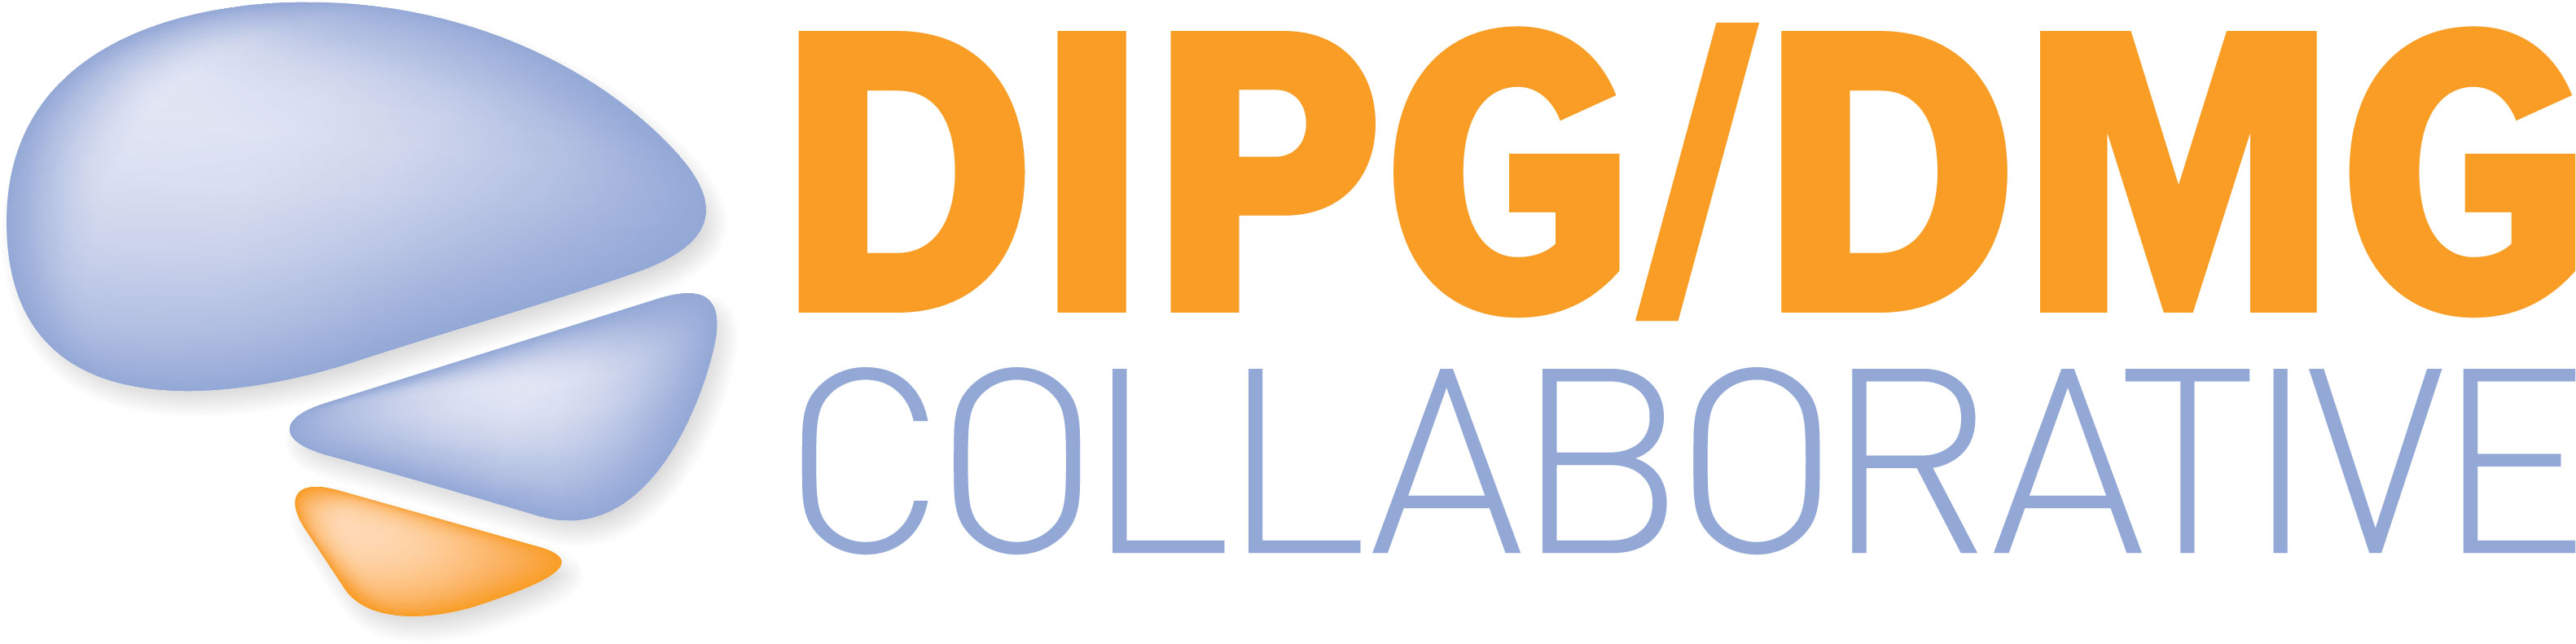 DIPG/DMG Collaborative